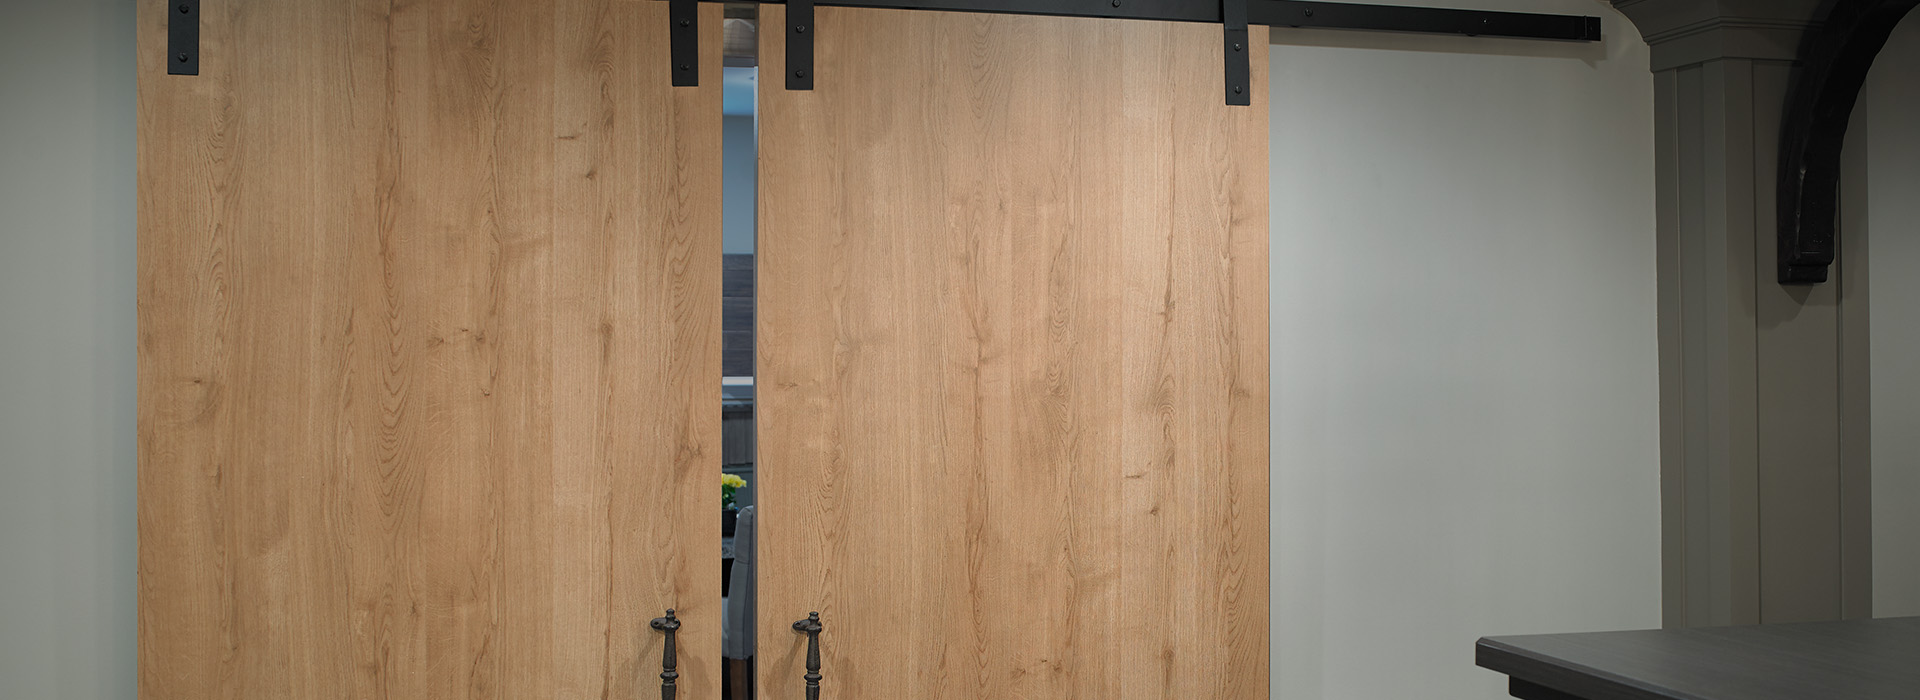 Formica® Brand Laminate Doors 9312-NG Planked Urban Oak